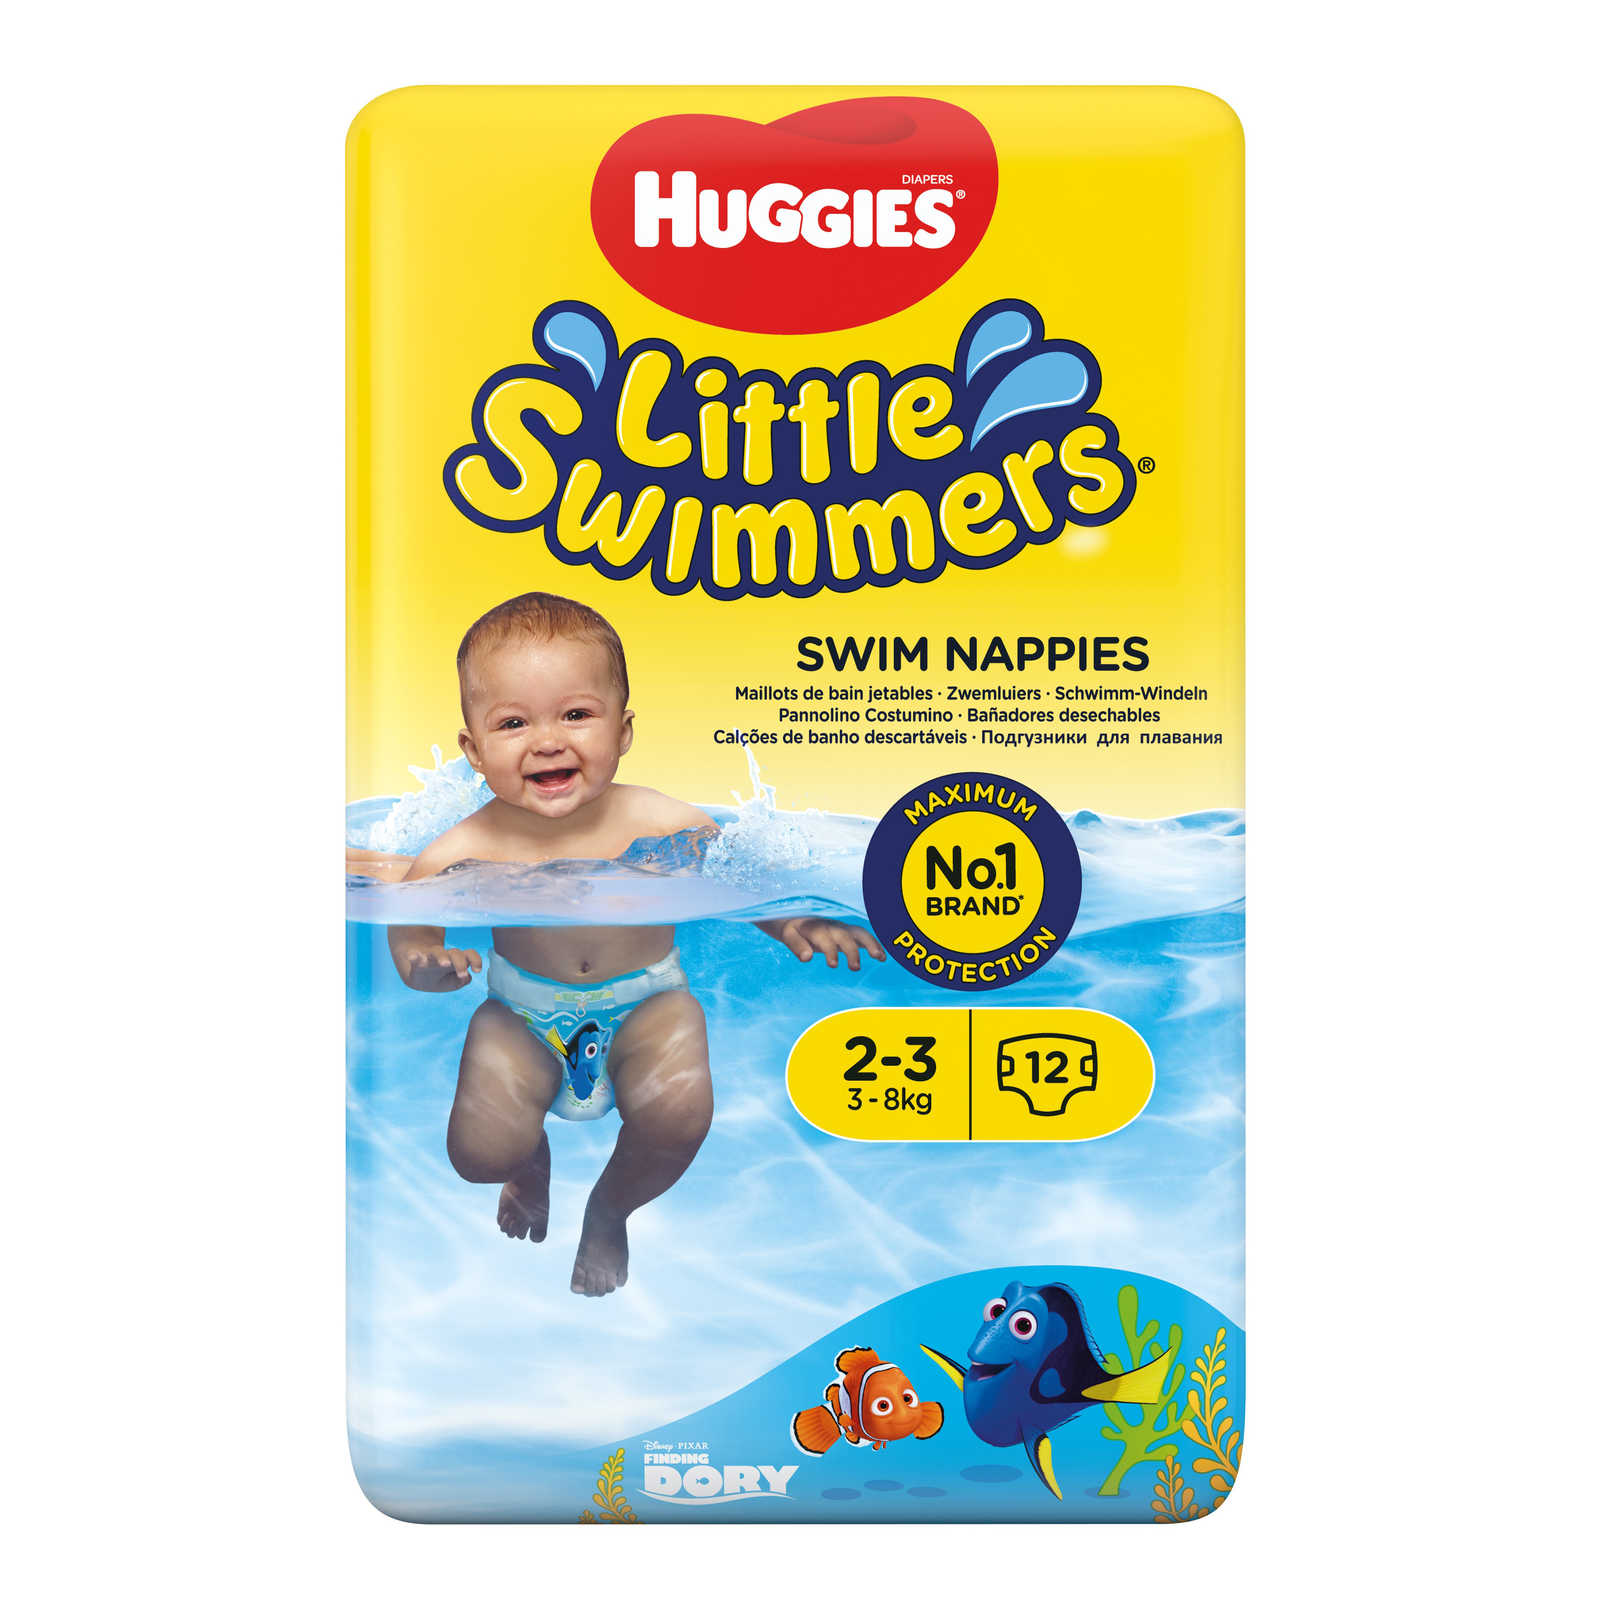 Huggies-Little Swimmers